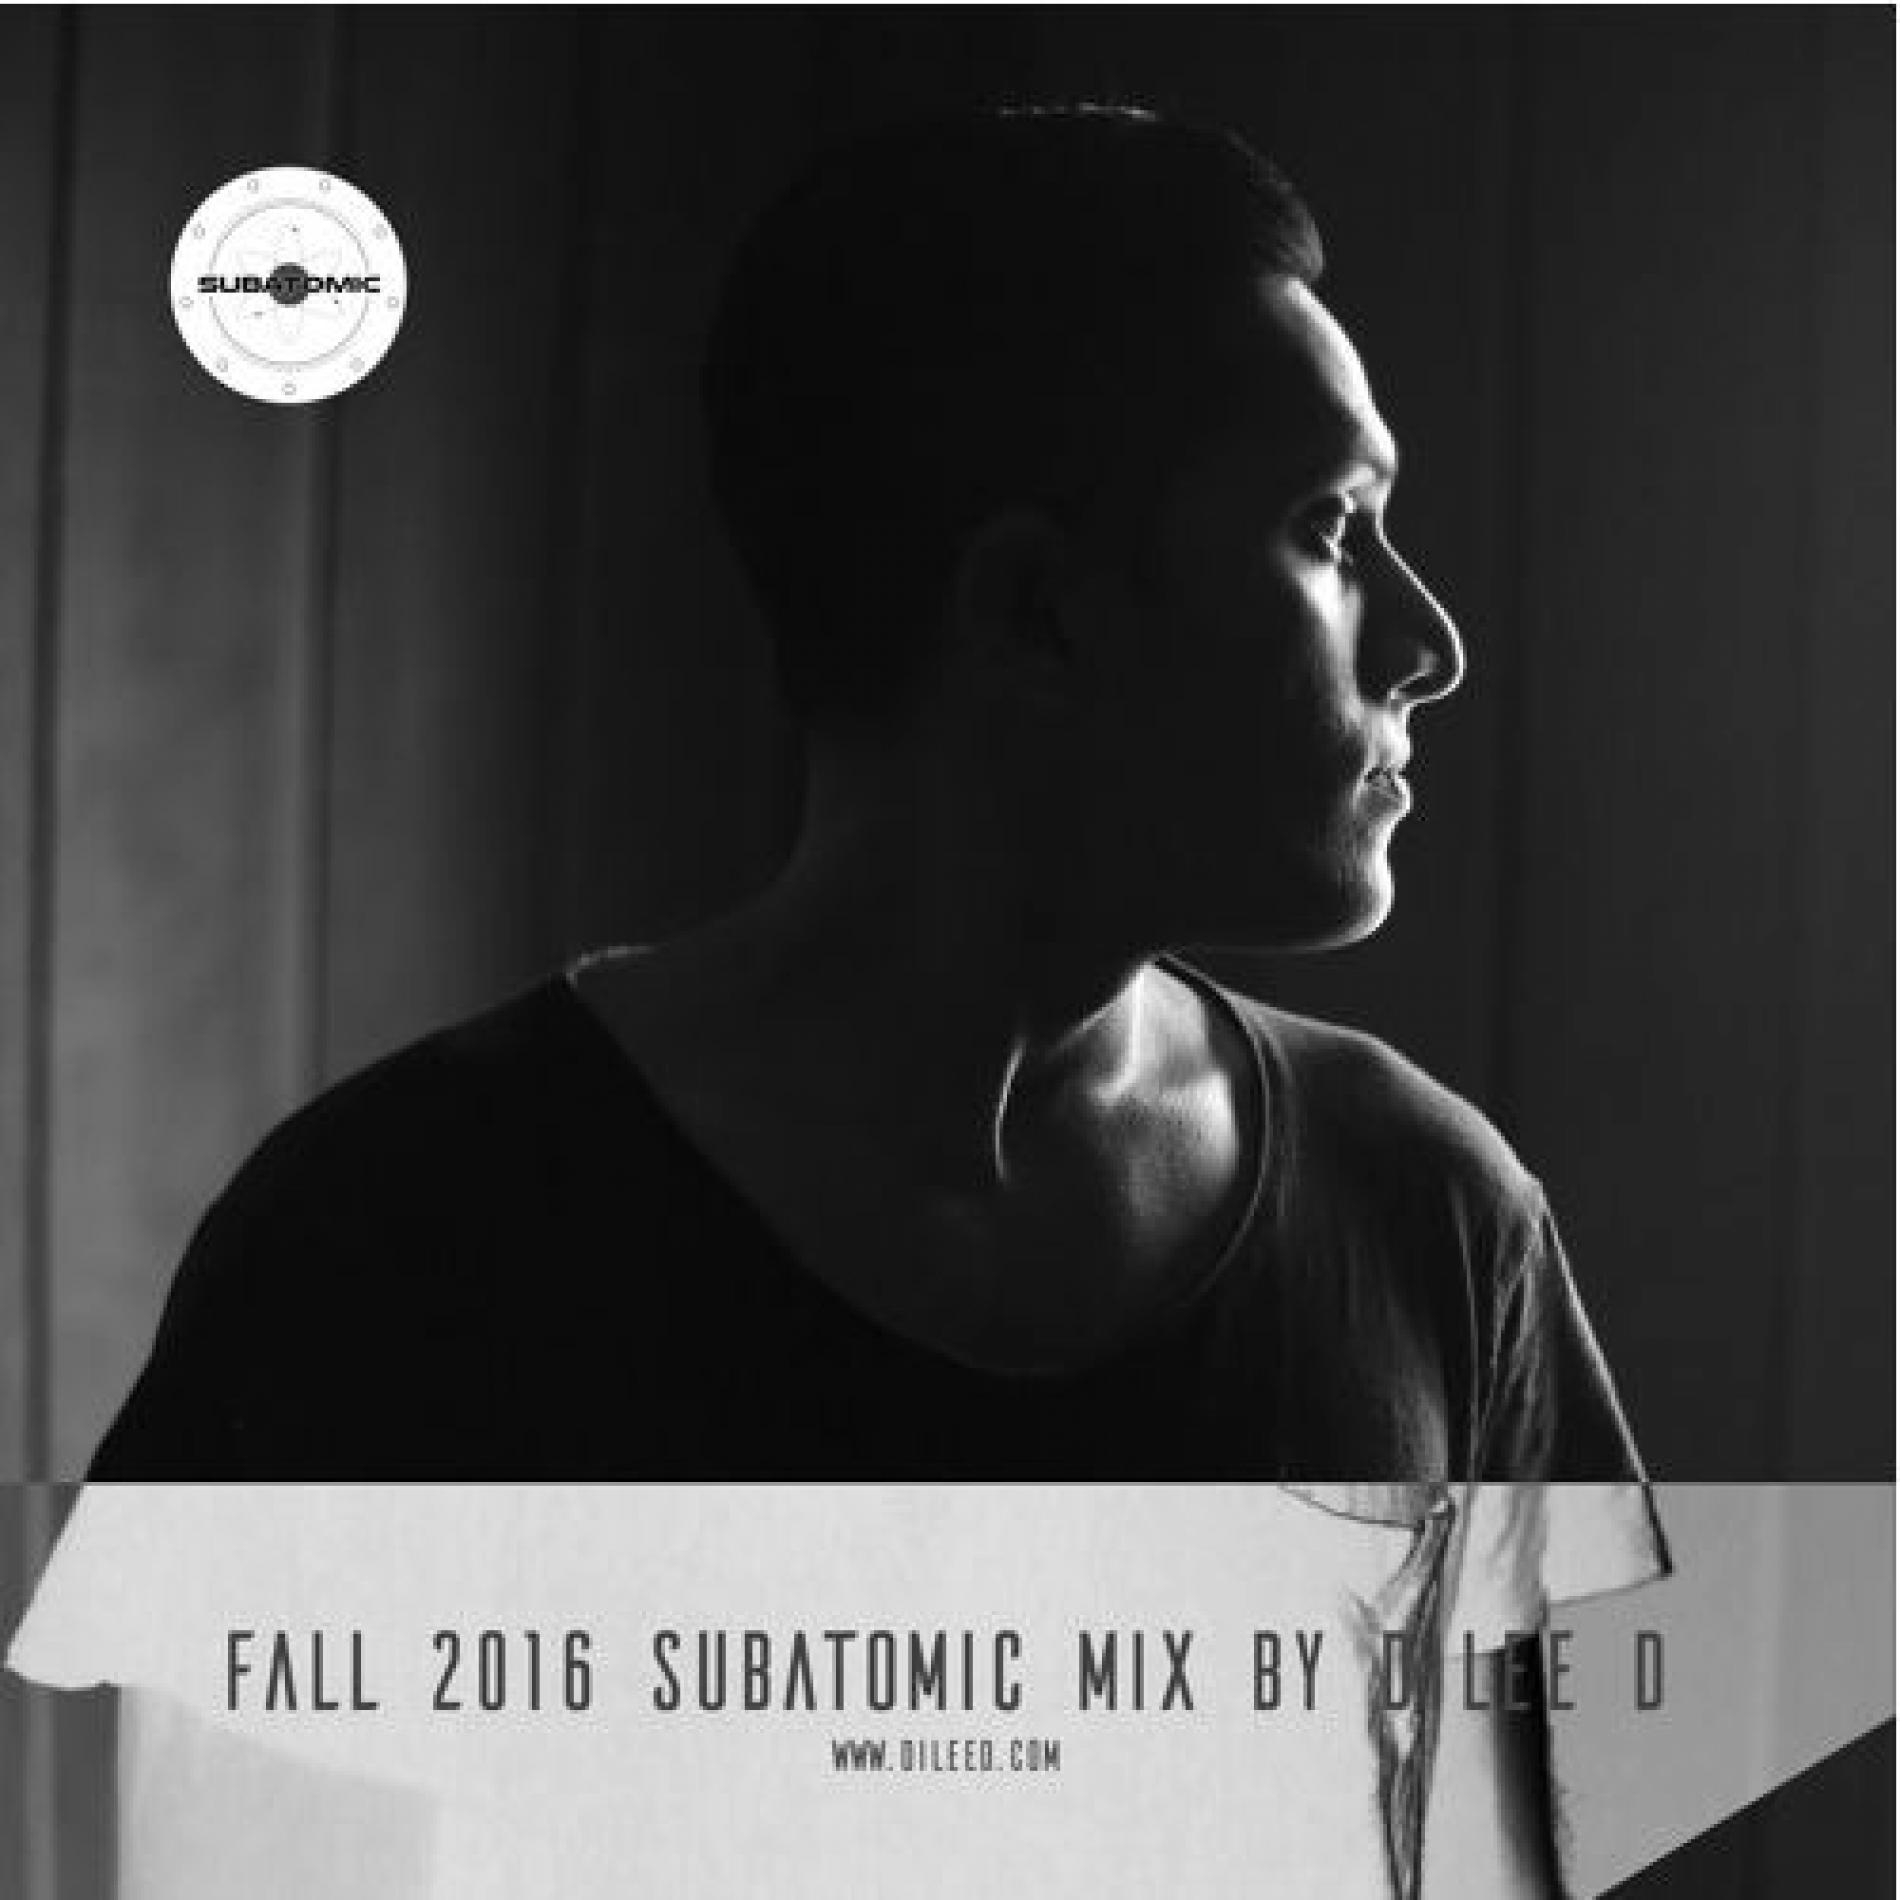 Dilee D – Fall 2016 Subatomic Mix